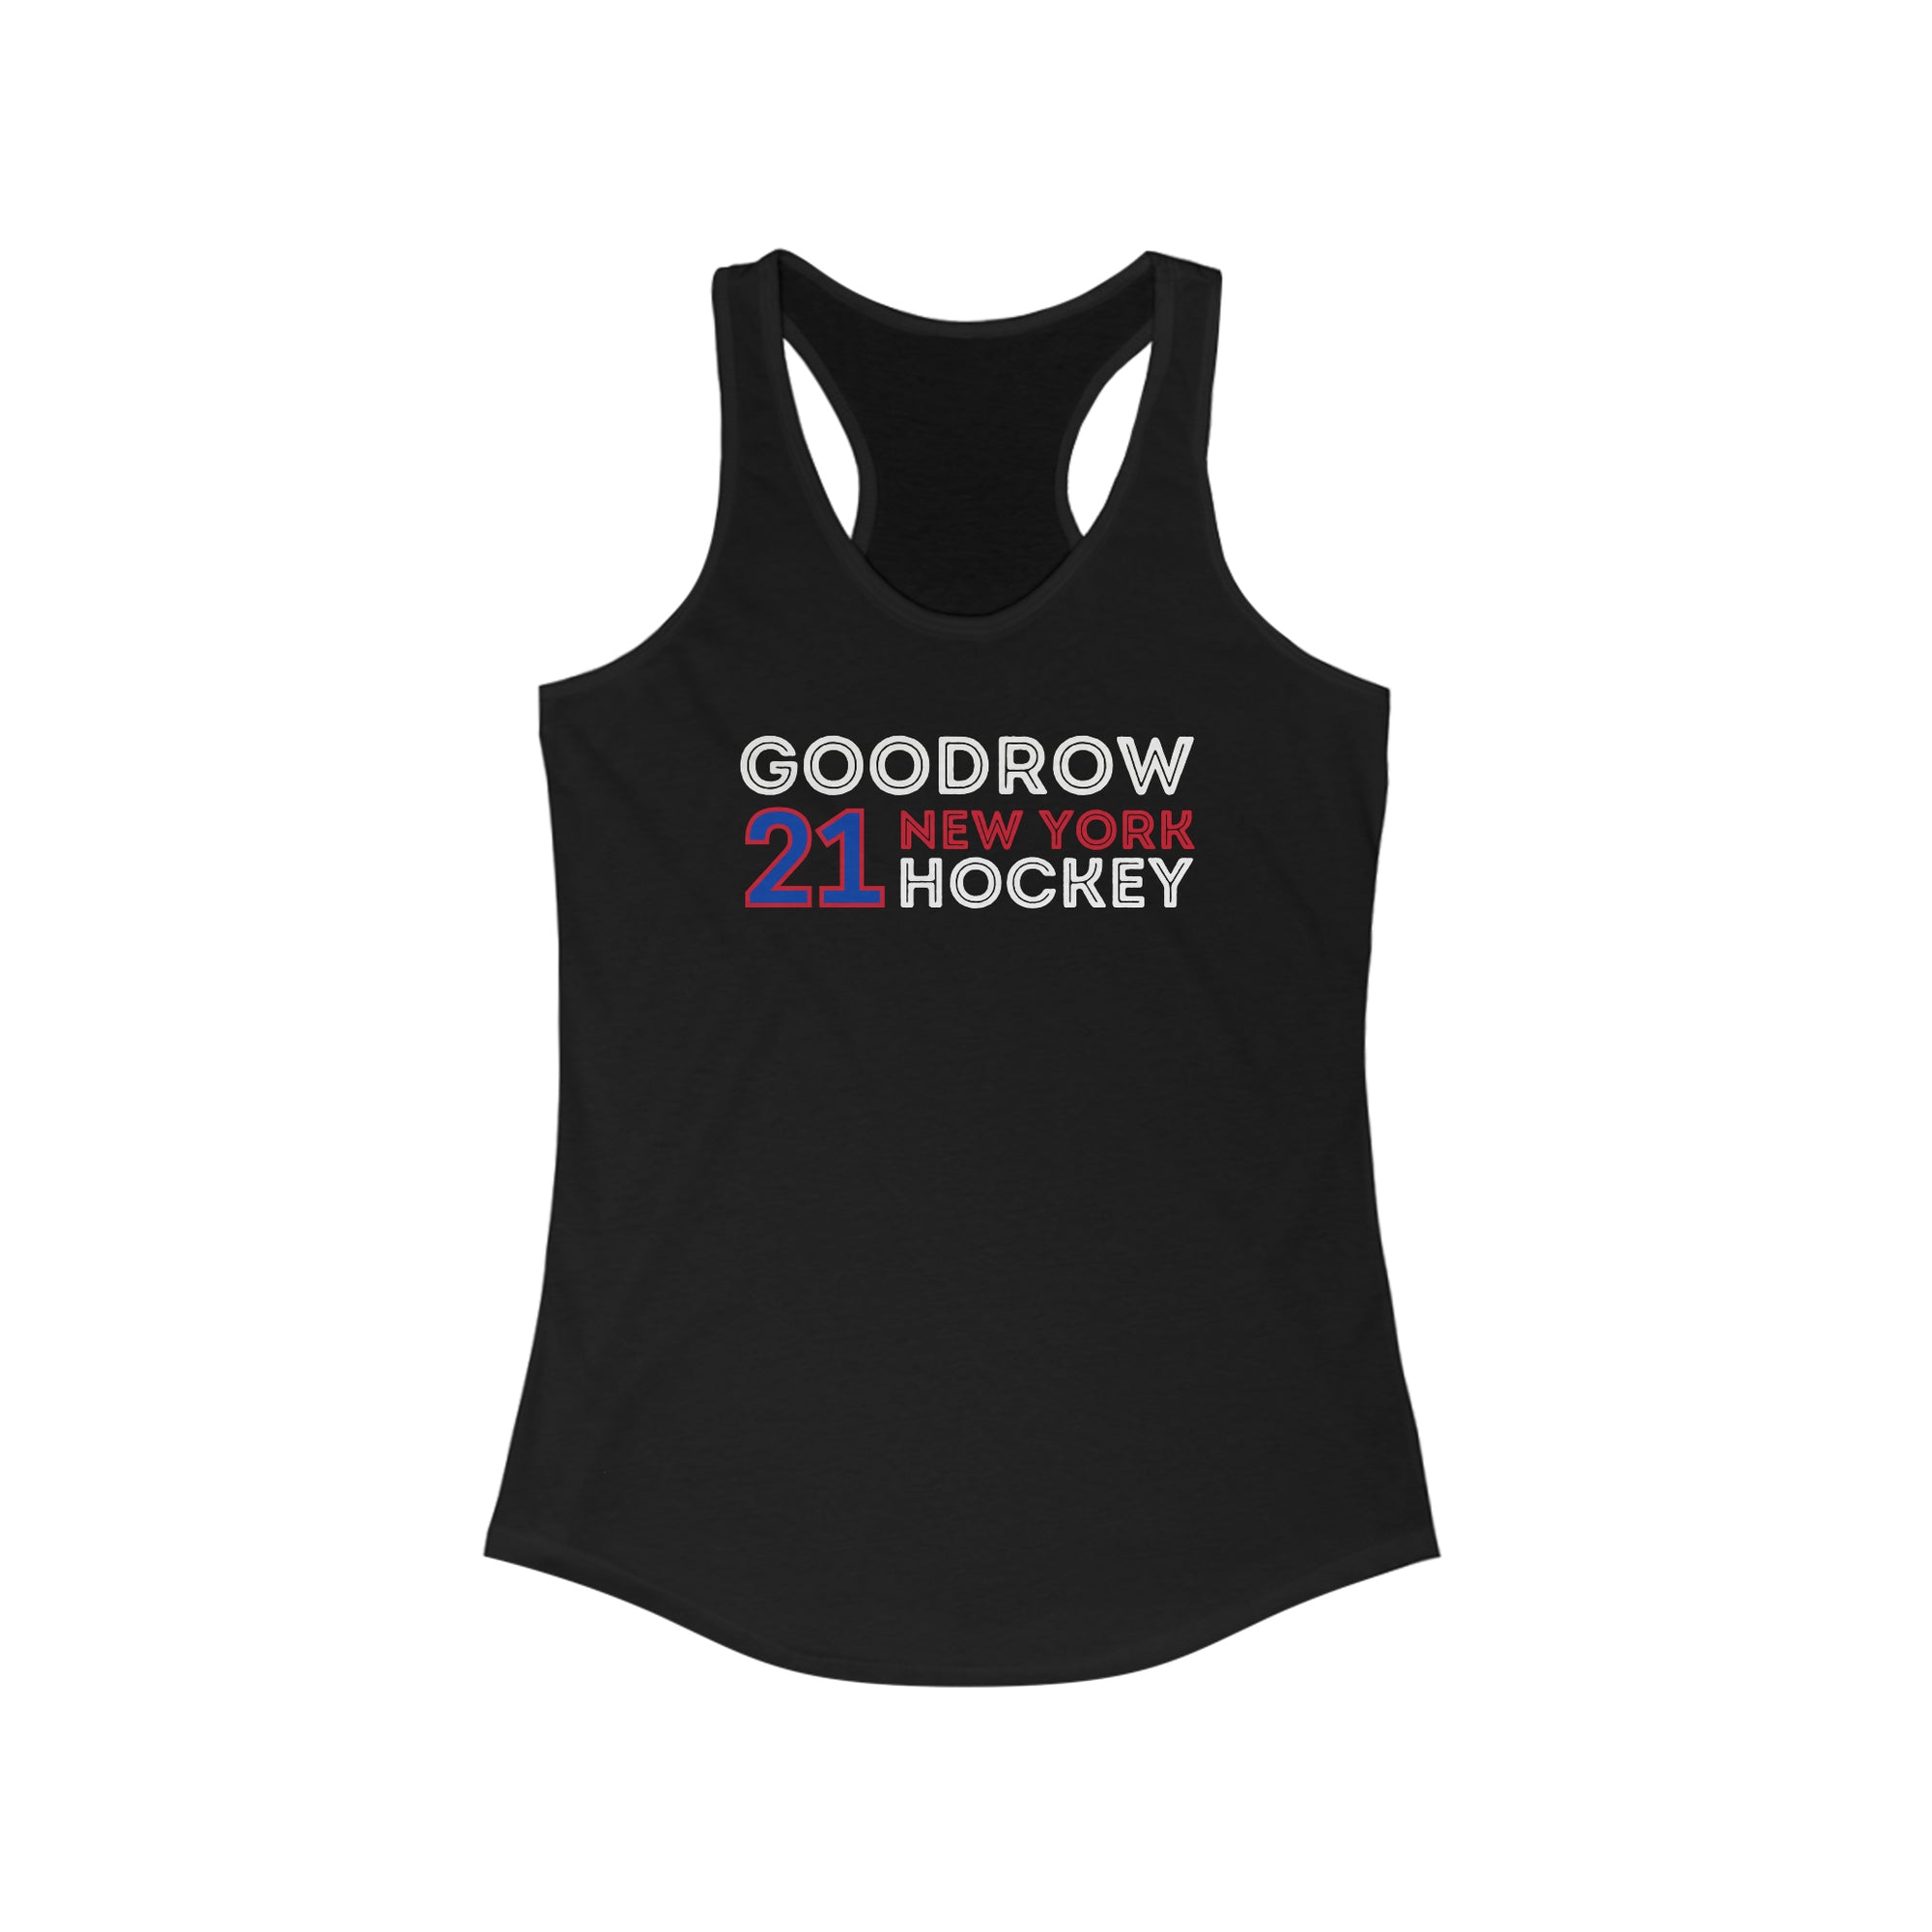 Goodrow 21 New York Hockey Grafitti Wall Design Women's Ideal Racerback Tank Top